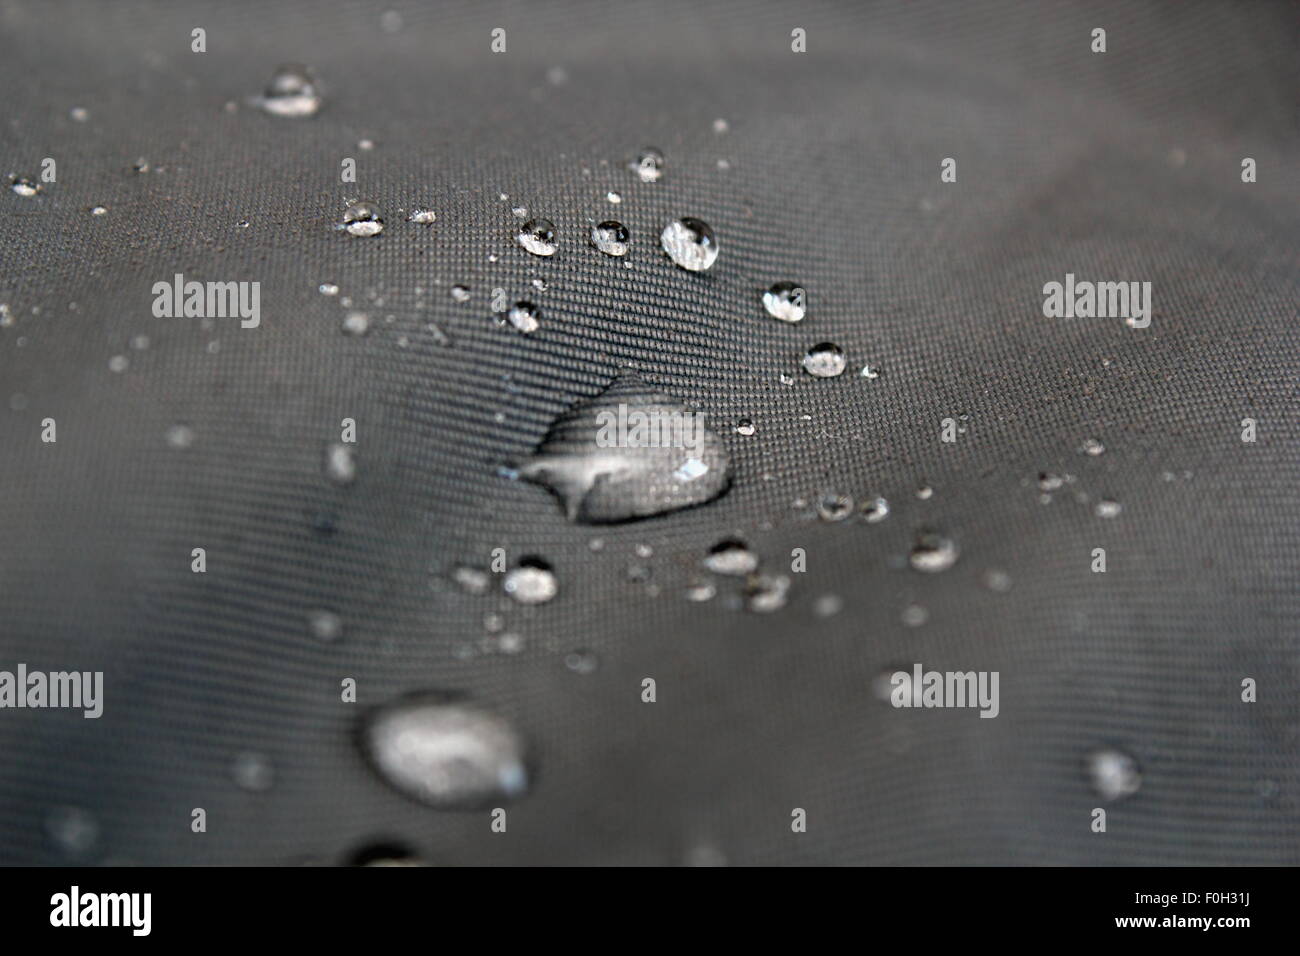 closeup image of rain drops on waterproof jacket material Stock Photo